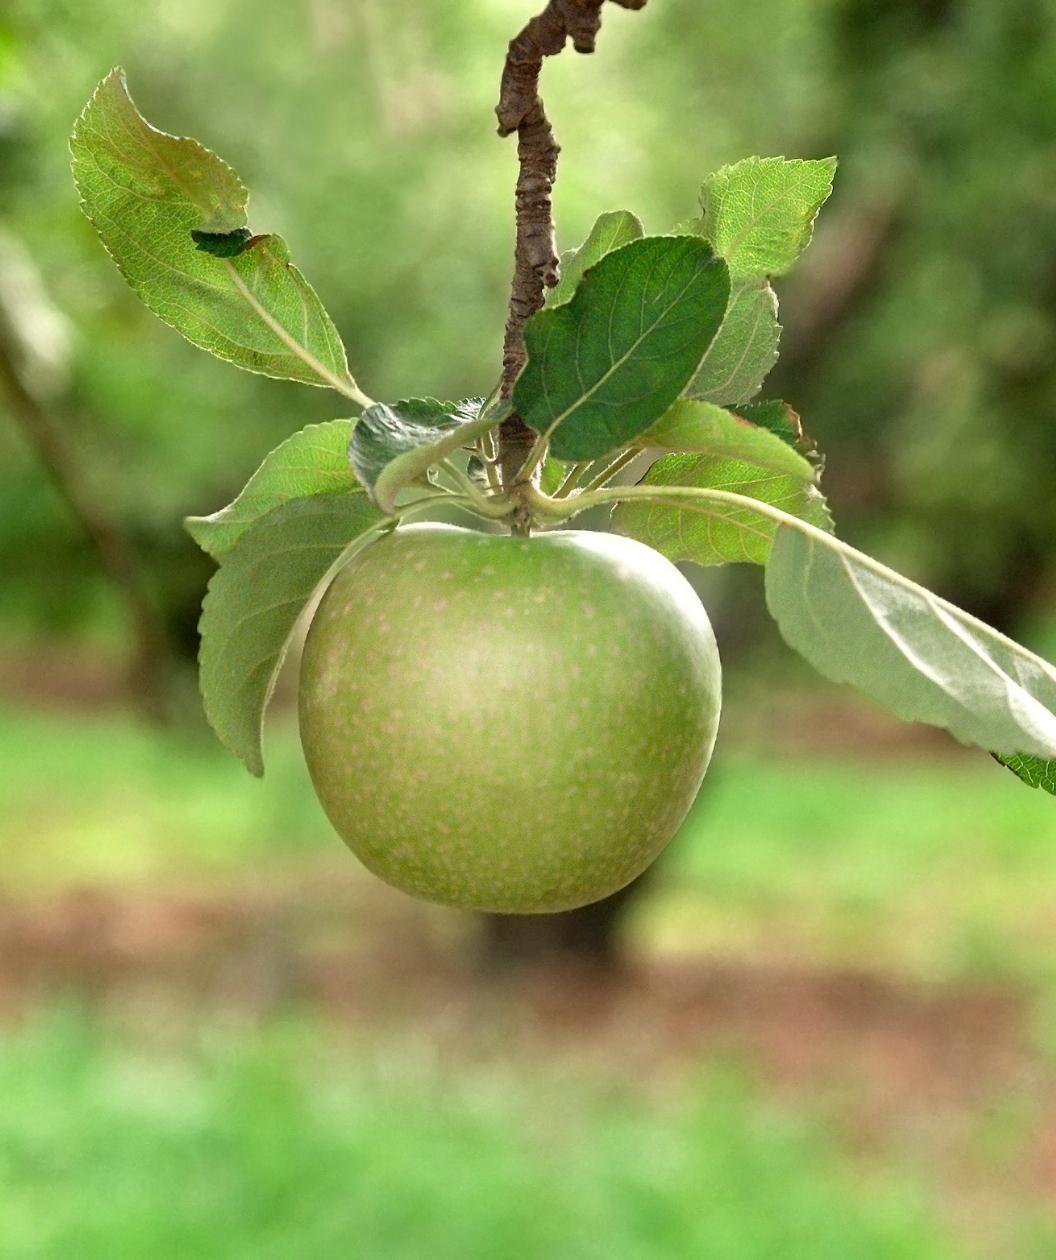 Granny Smith Apples - Organic Granny Smith Apples - Washington Fruit